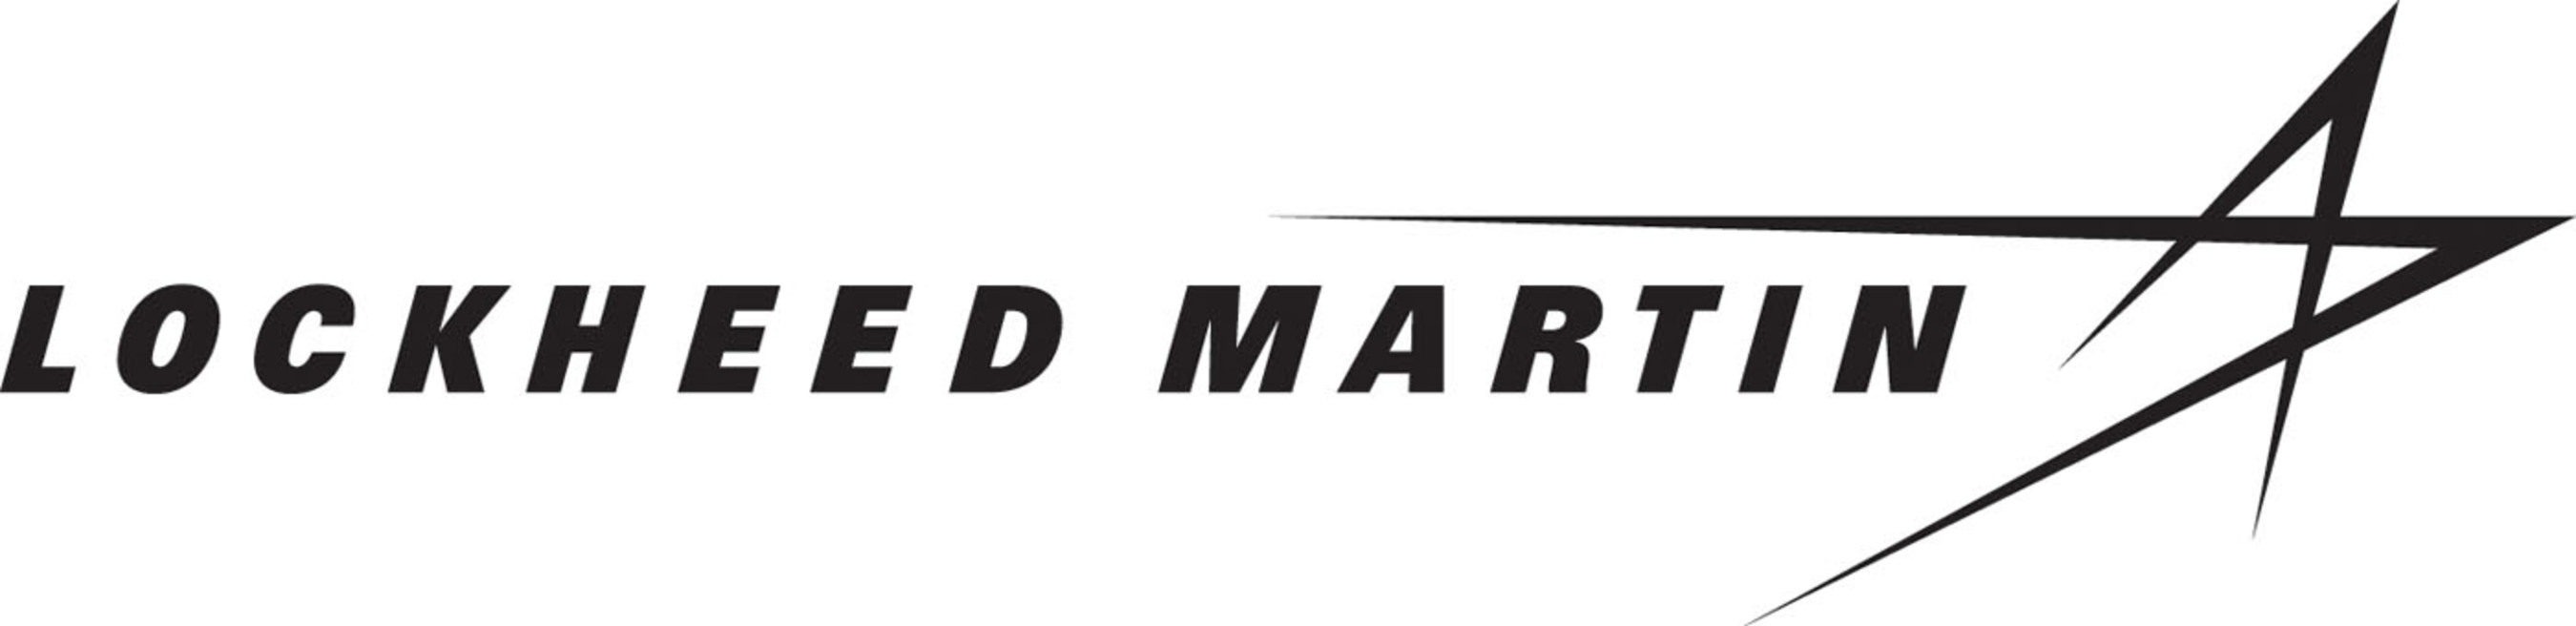 Lockheed Martin Logo. (PRNewsFoto/Lockheed Martin) (PRNewsFoto/LOCKHEED MARTIN)